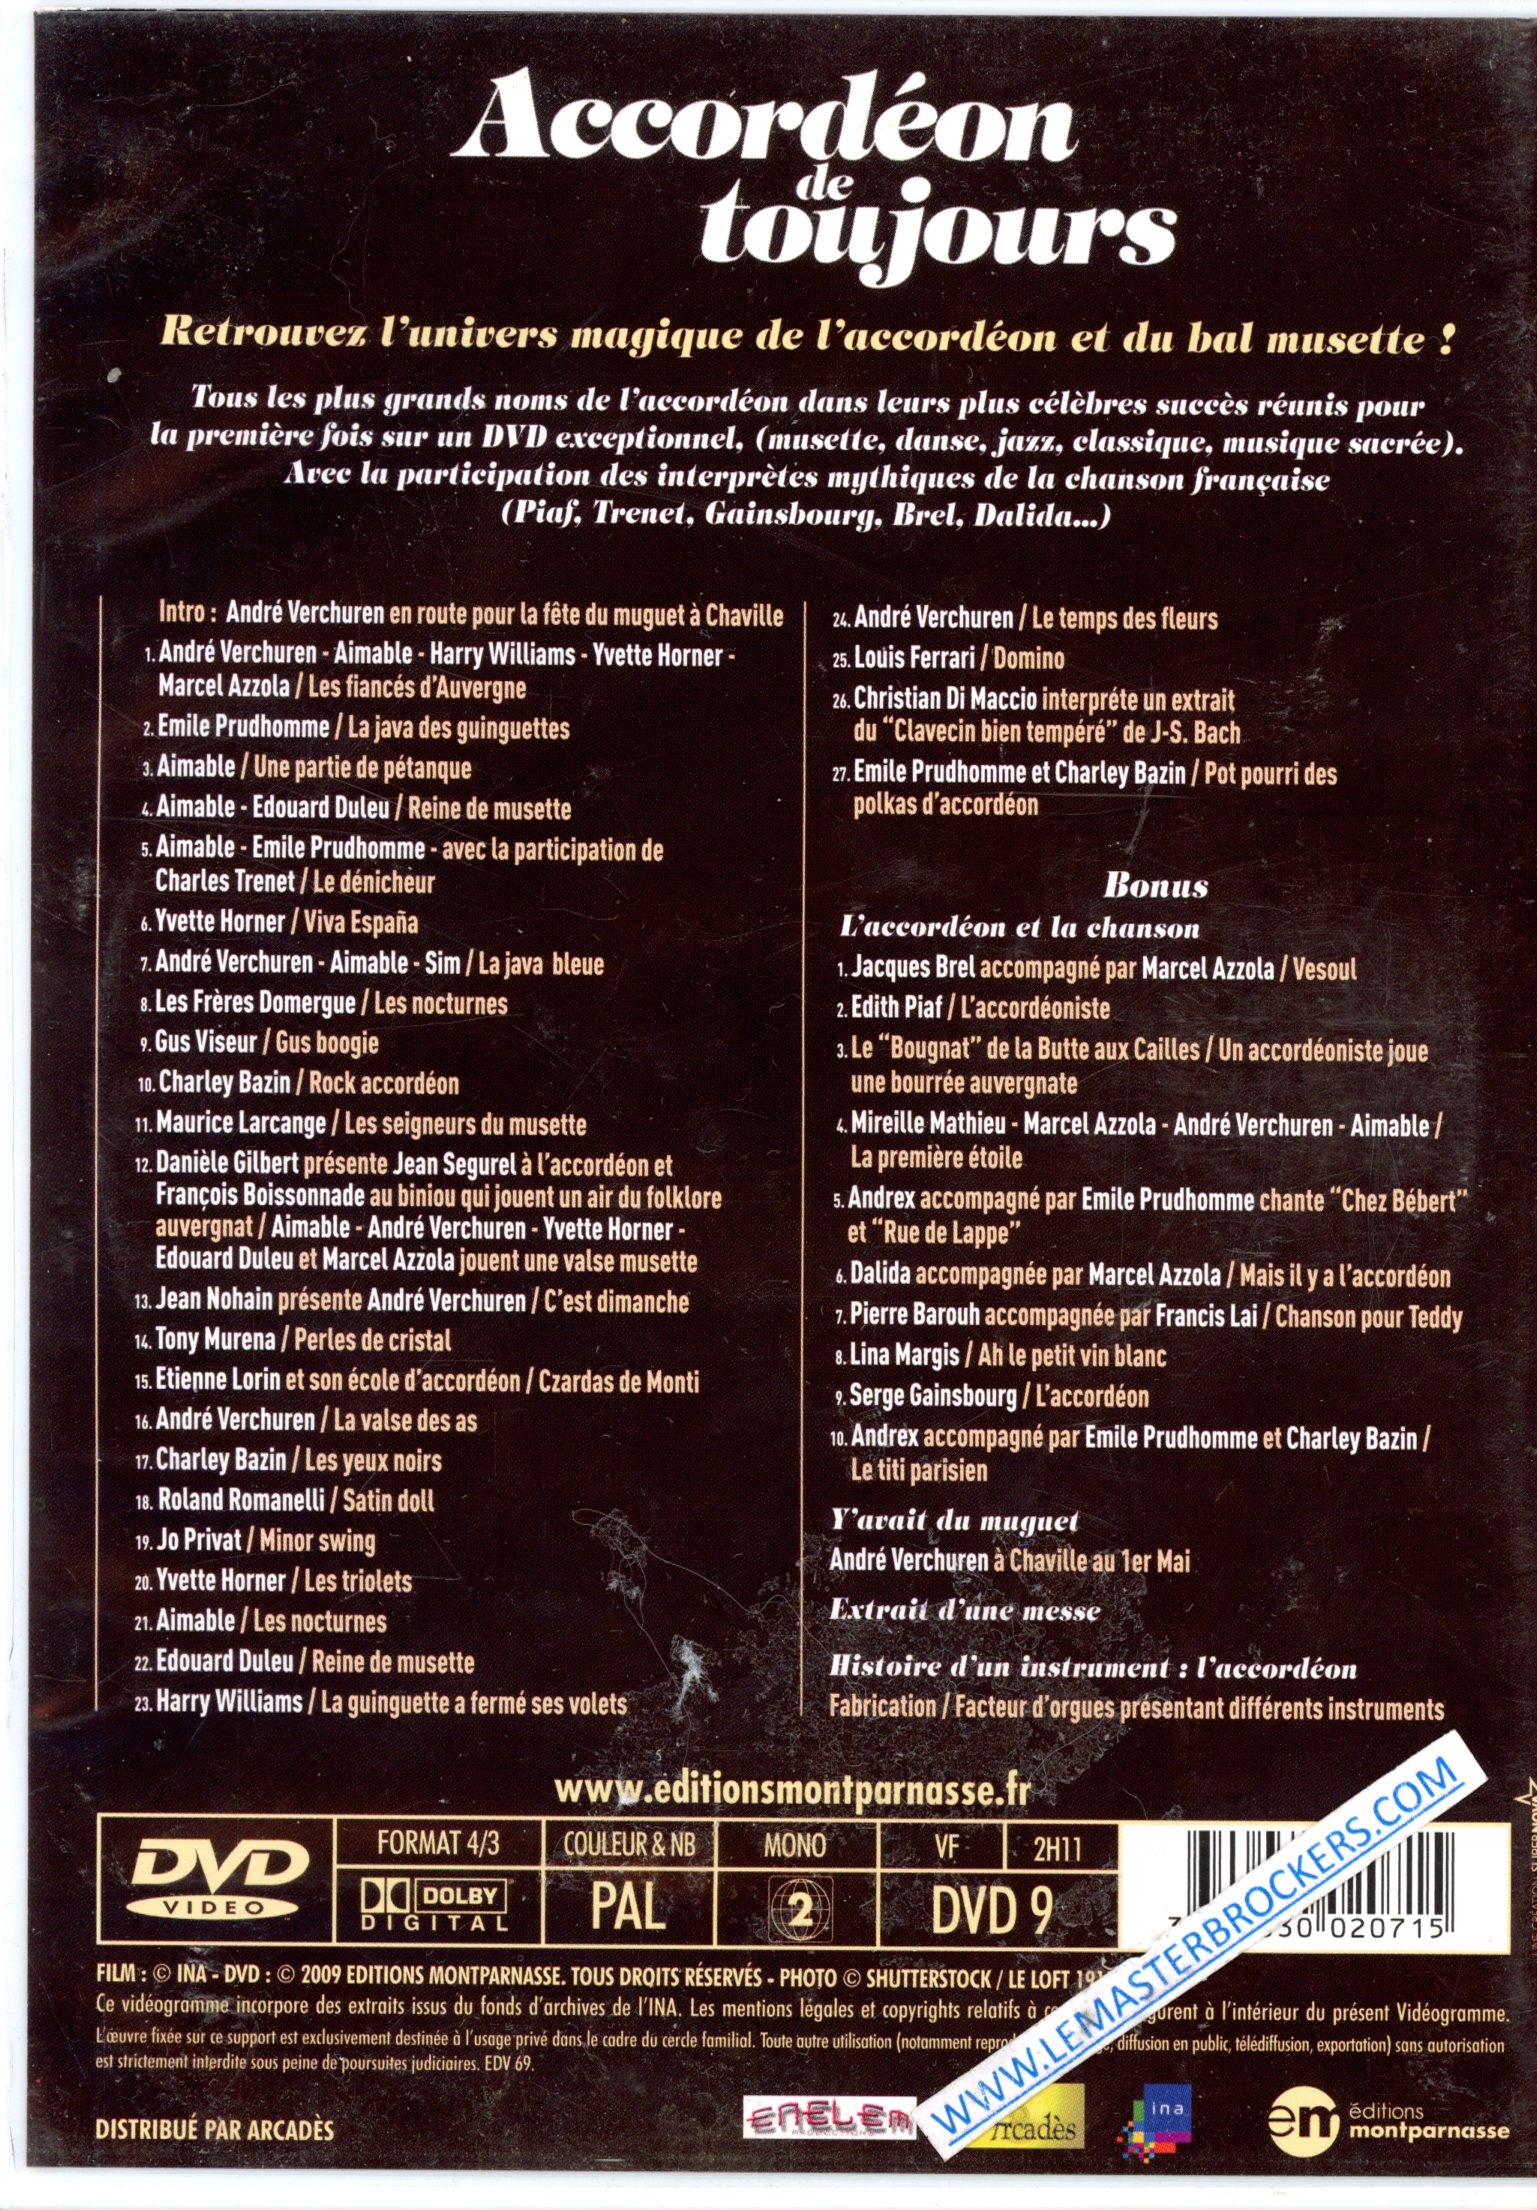 ACCORDEON DE TOUJOURS DVD-LEMASTERBROCKERS